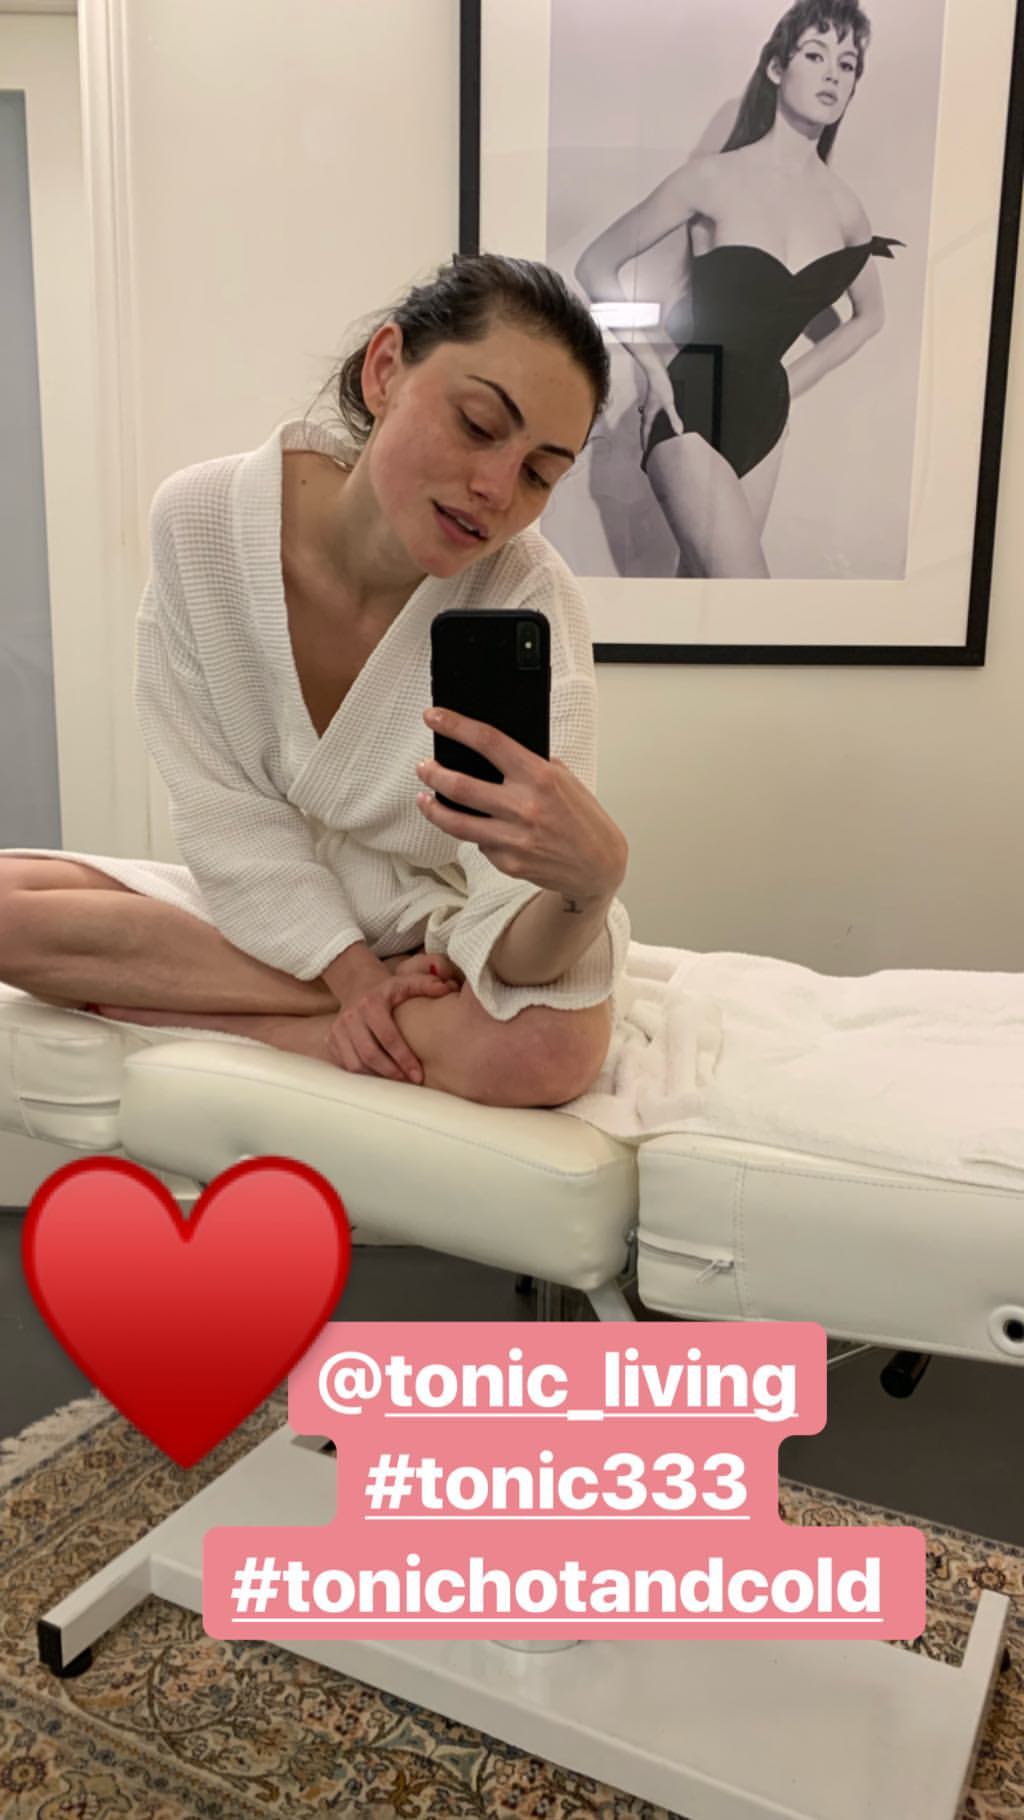 Phoebe Tonkin â€“ Instagram and social media